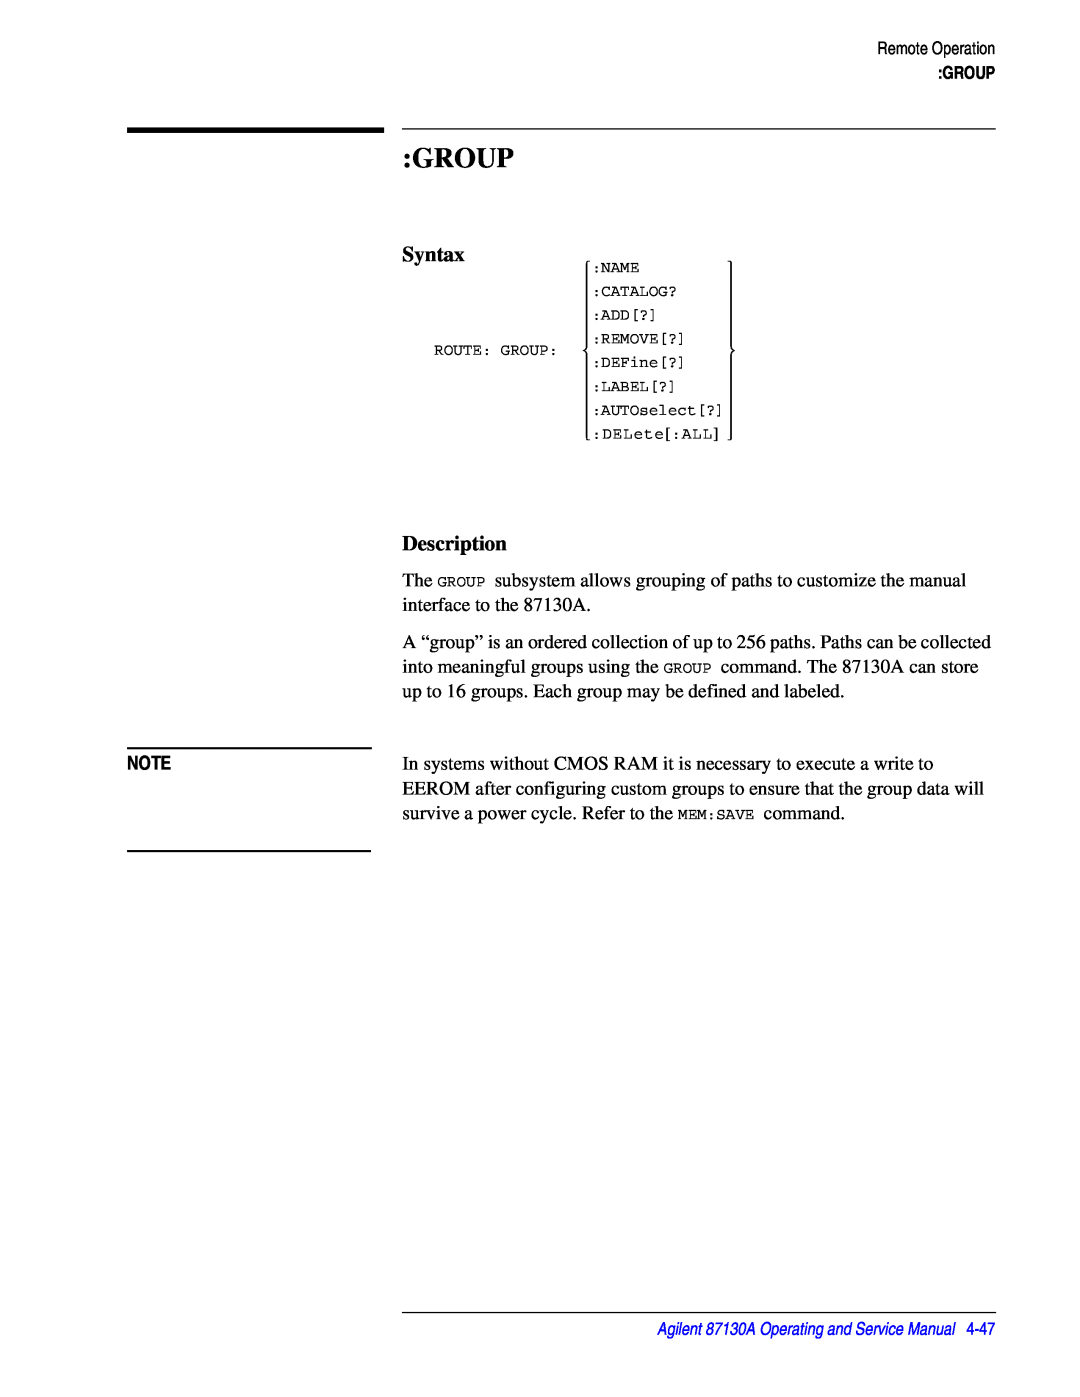 Agilent Technologies 87130A manual Group, Syntax, Description 